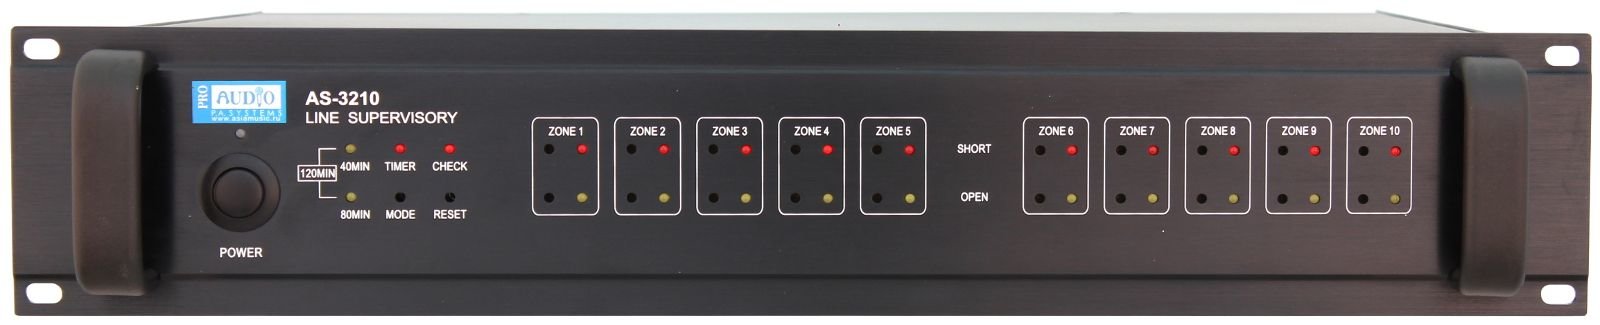 PROAUDIO AS-3210 Контроллер целостности линий громкоговорителей, 10 зон контроля